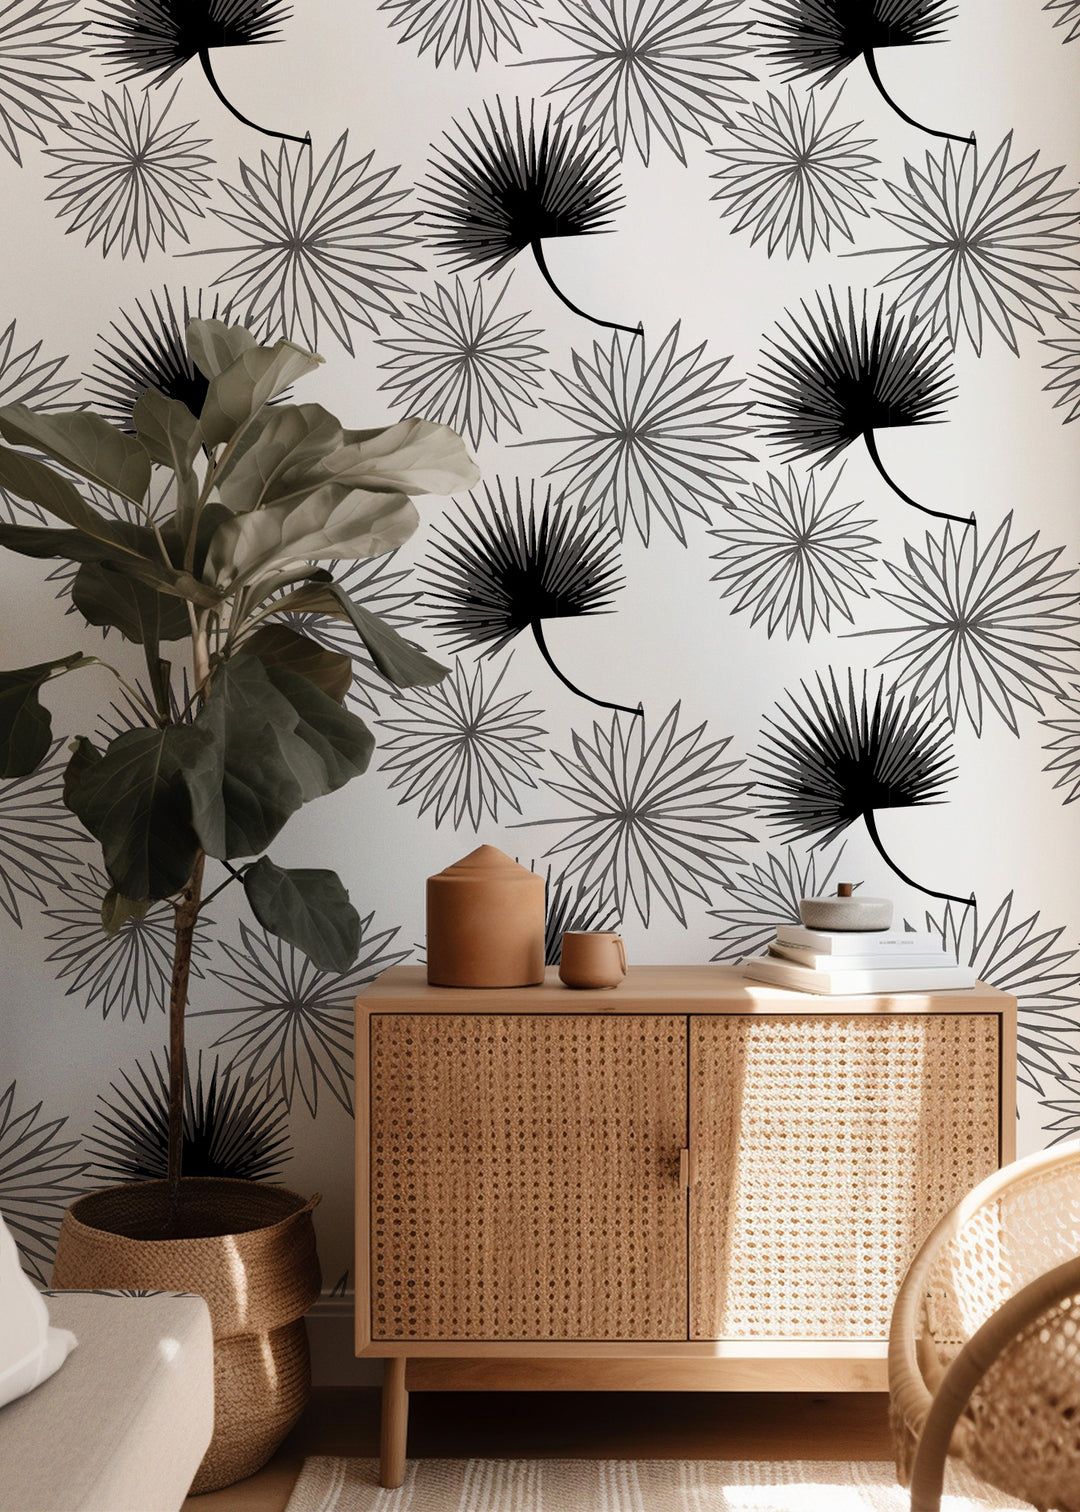 Cabbage Palm - White Floral Wallpaper by Bohemian Bungalow